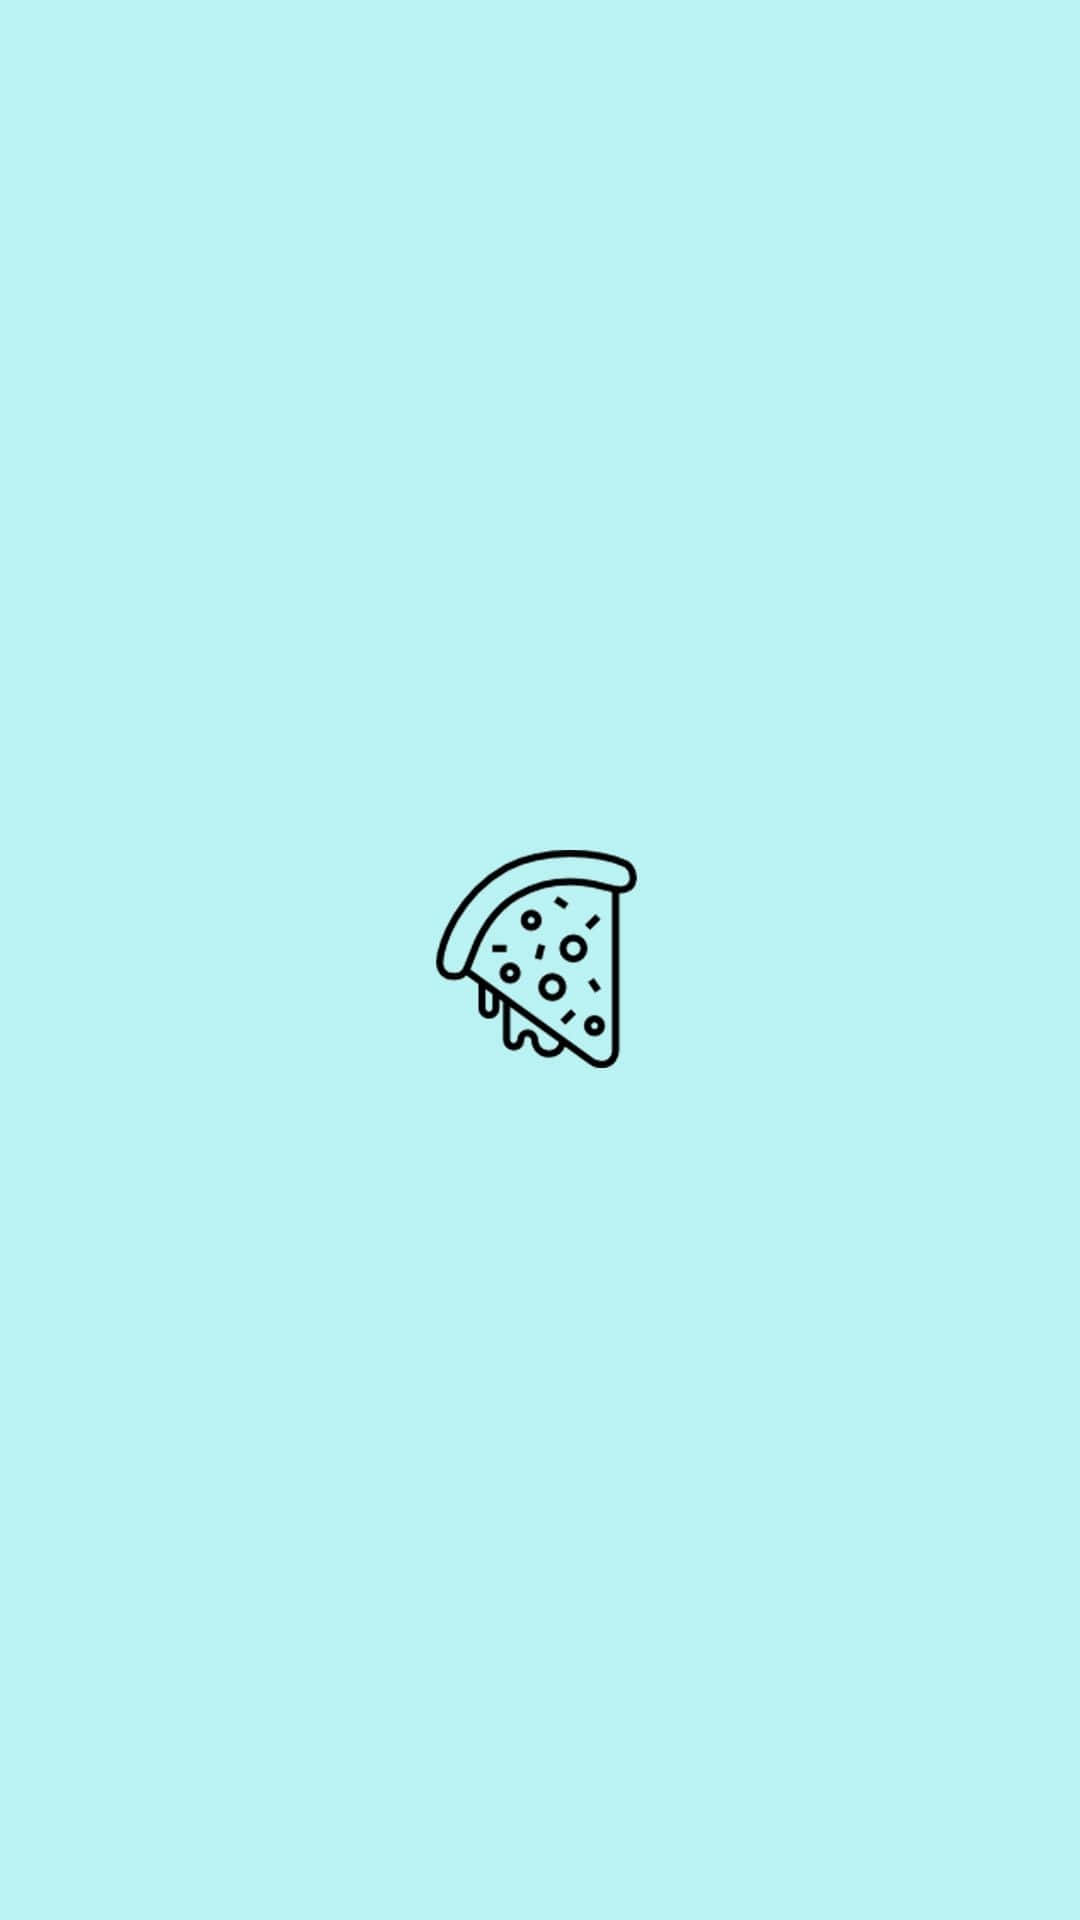 Minimalist Cute iPhone Teal Pizza Icon Wallpaper